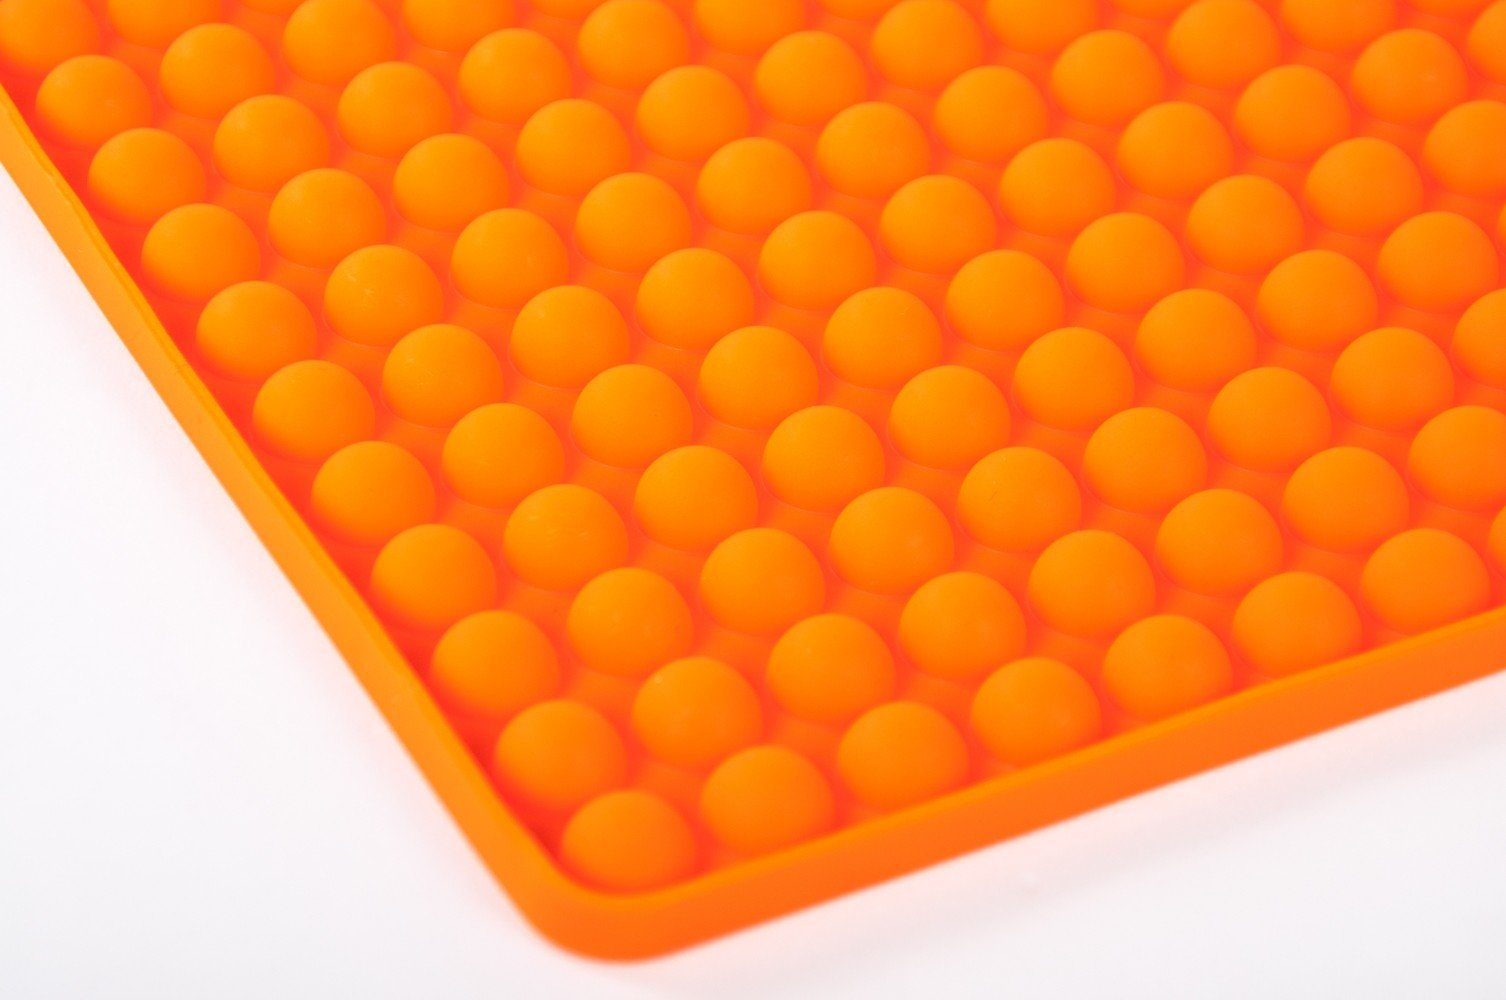 Backmatte Ausrollmatte Noppen 4er-Set BURI Dauerbackmatte mit Unte, Silikon Backunterlage Silikon